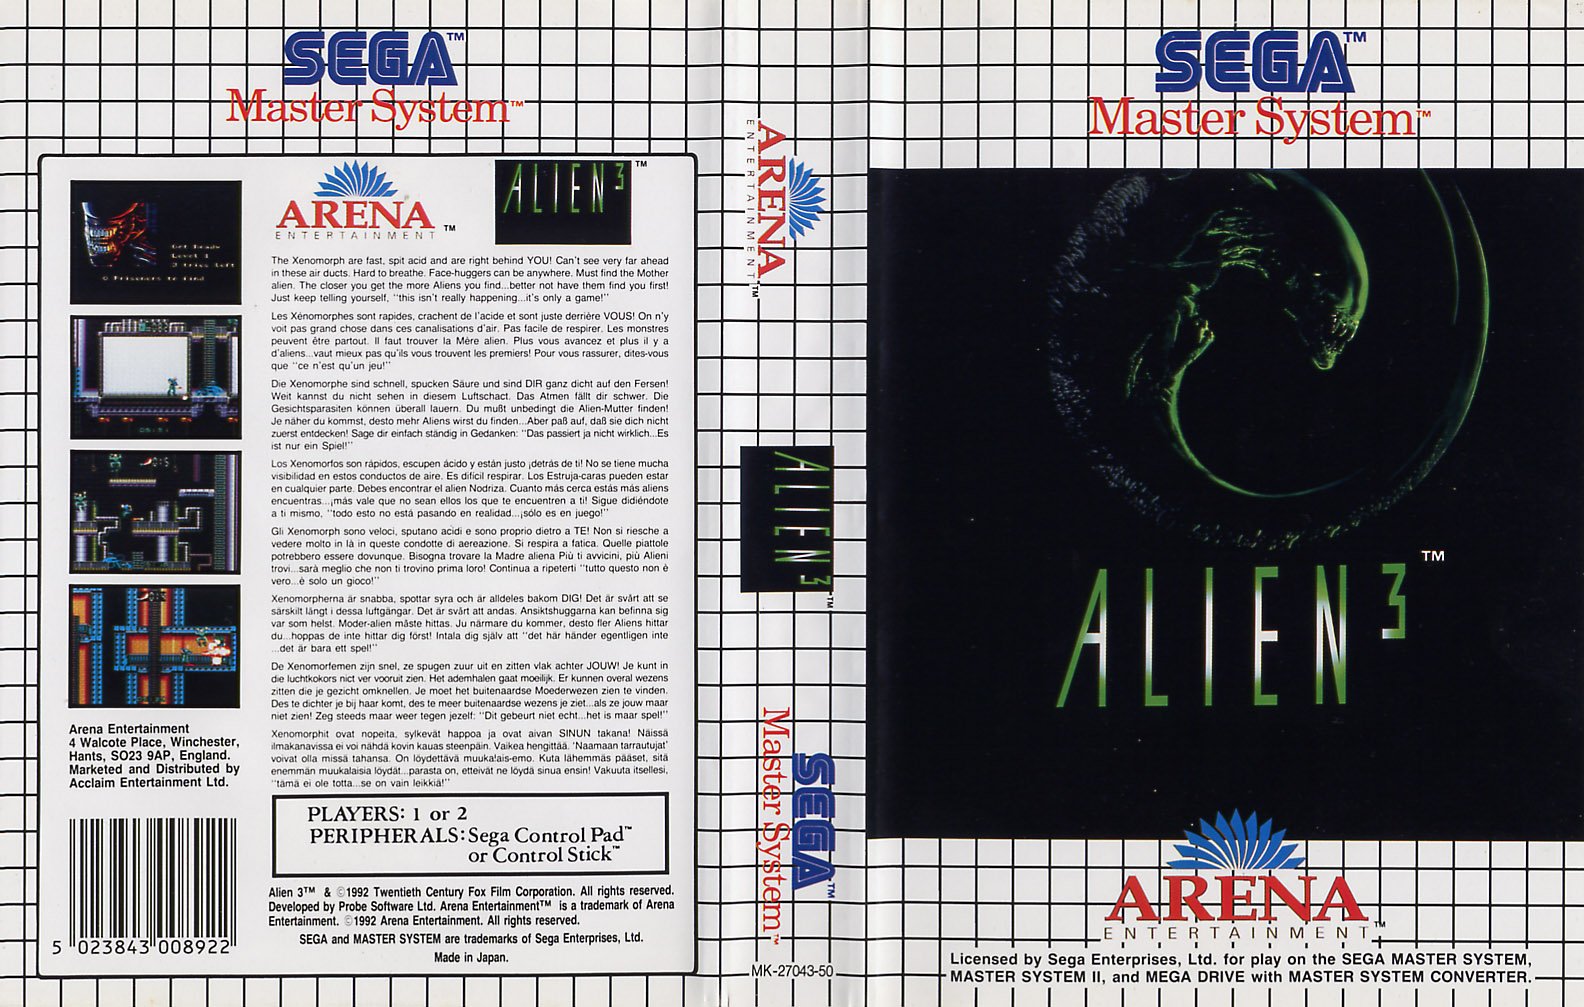 Caratula de Alien 3 para Sega Master System